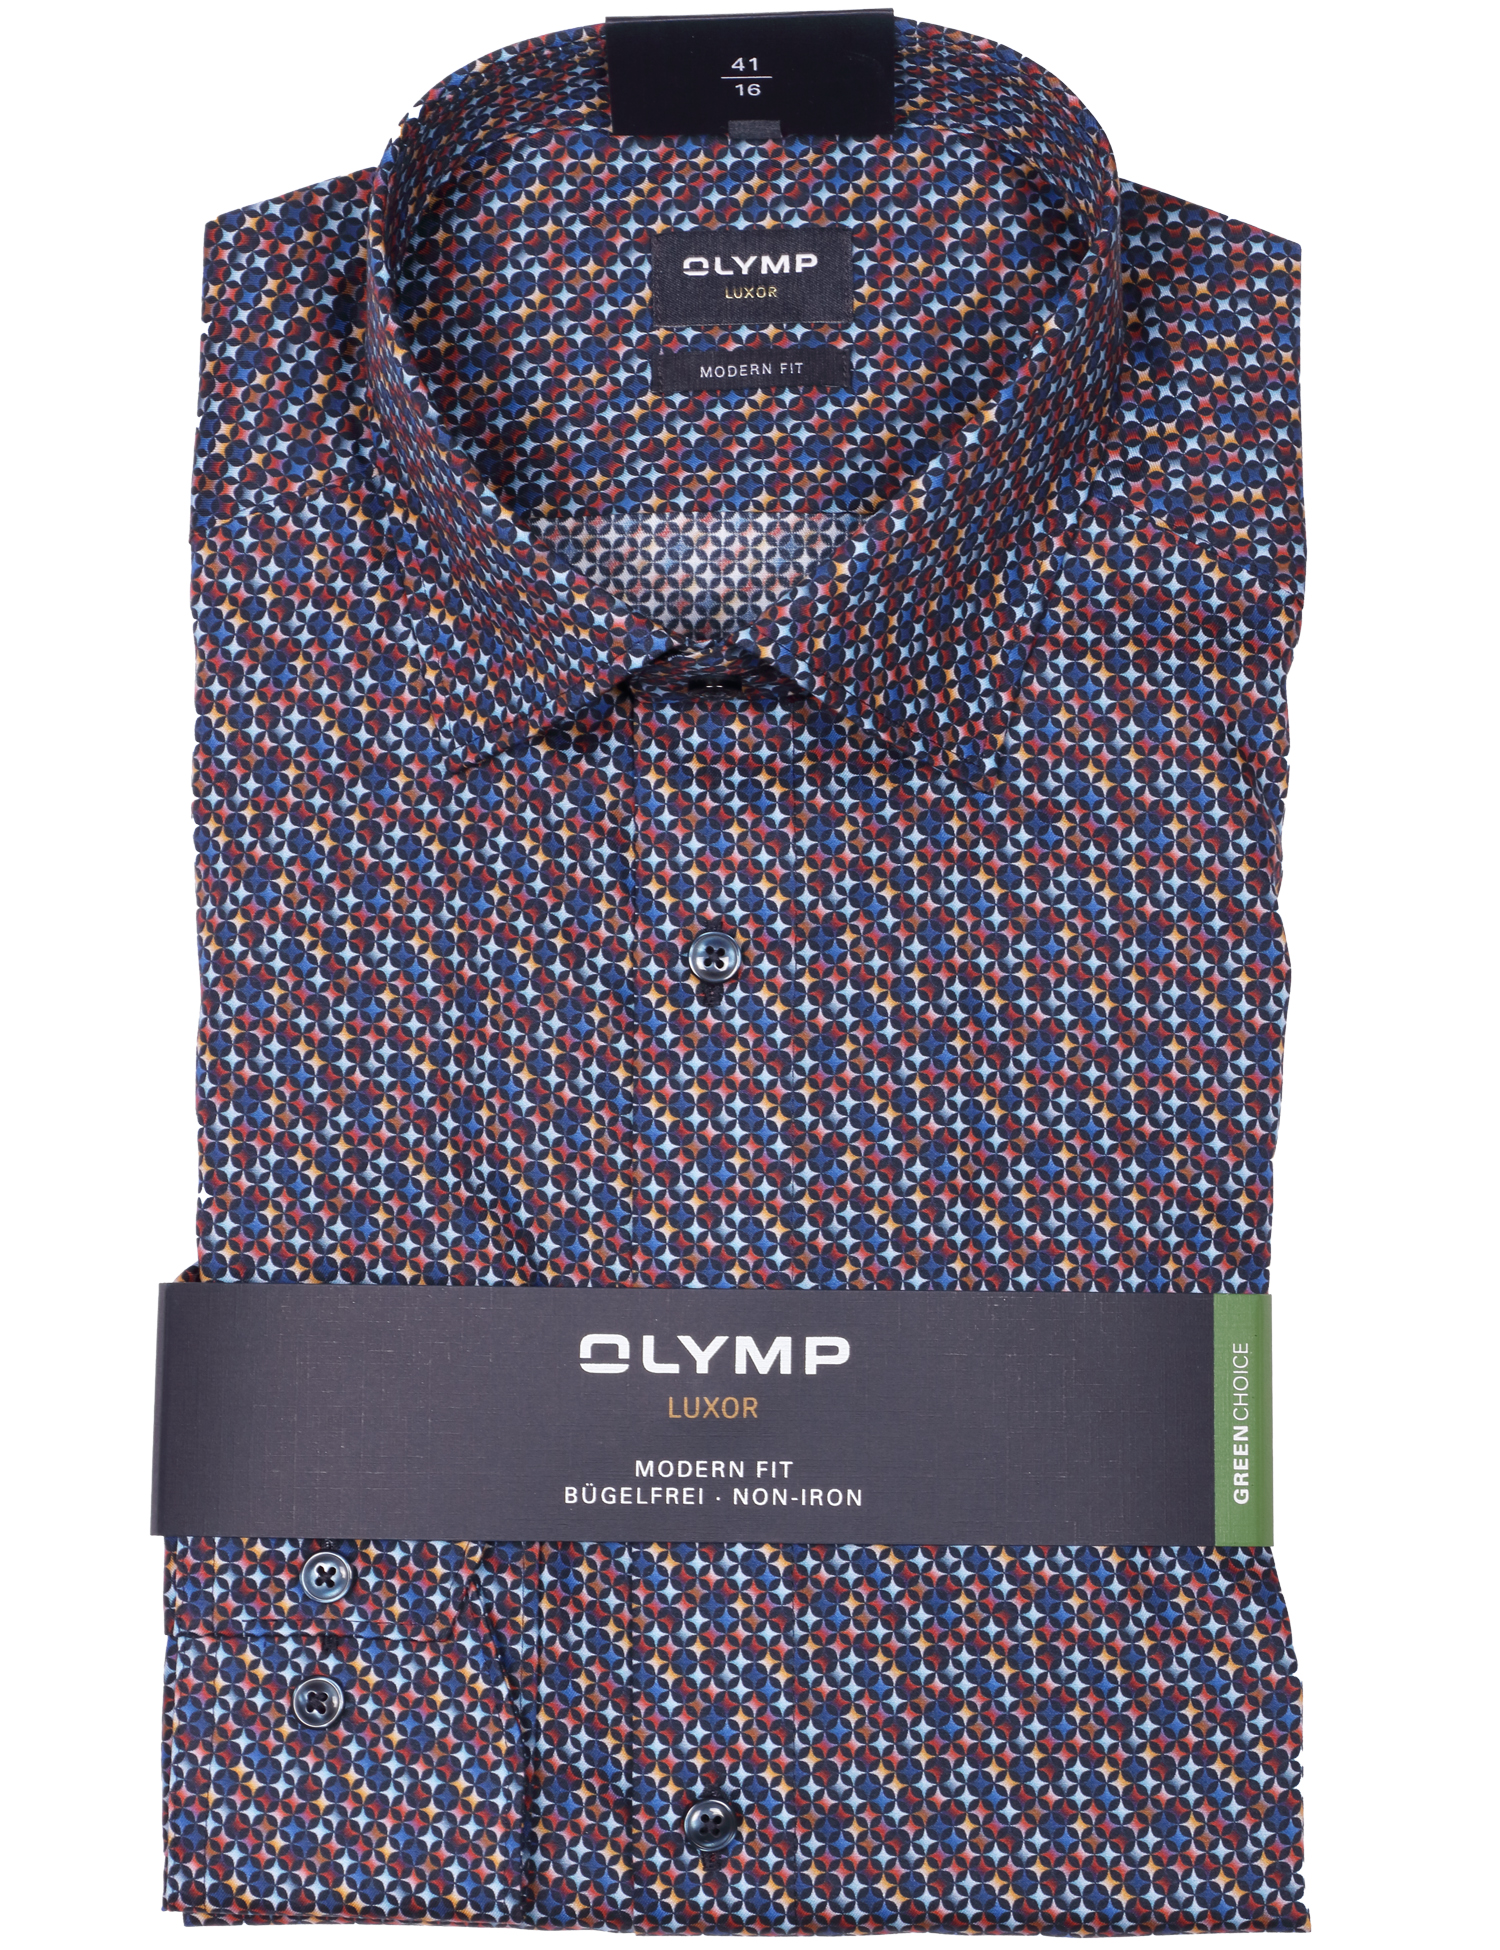 Olymp Hemd Luxor modern fit - blau